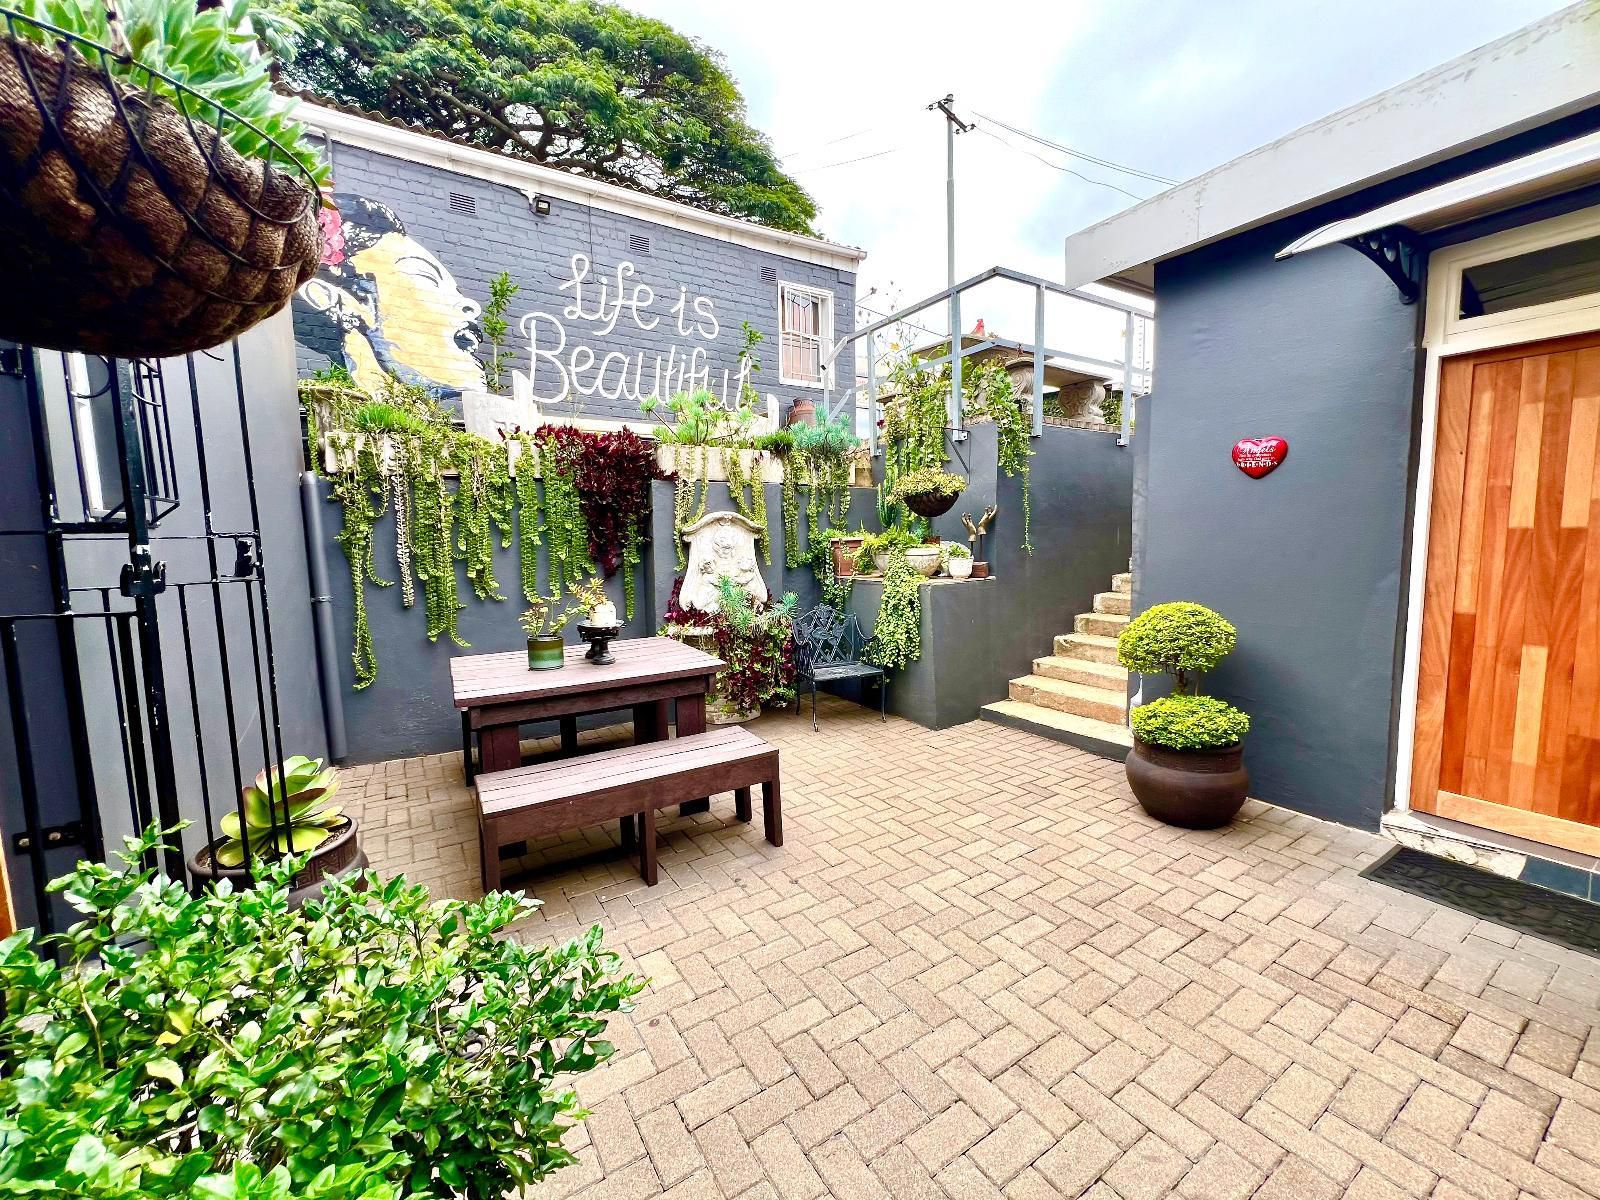 Terebinte Berea Durban Kwazulu Natal South Africa House, Building, Architecture, Garden, Nature, Plant